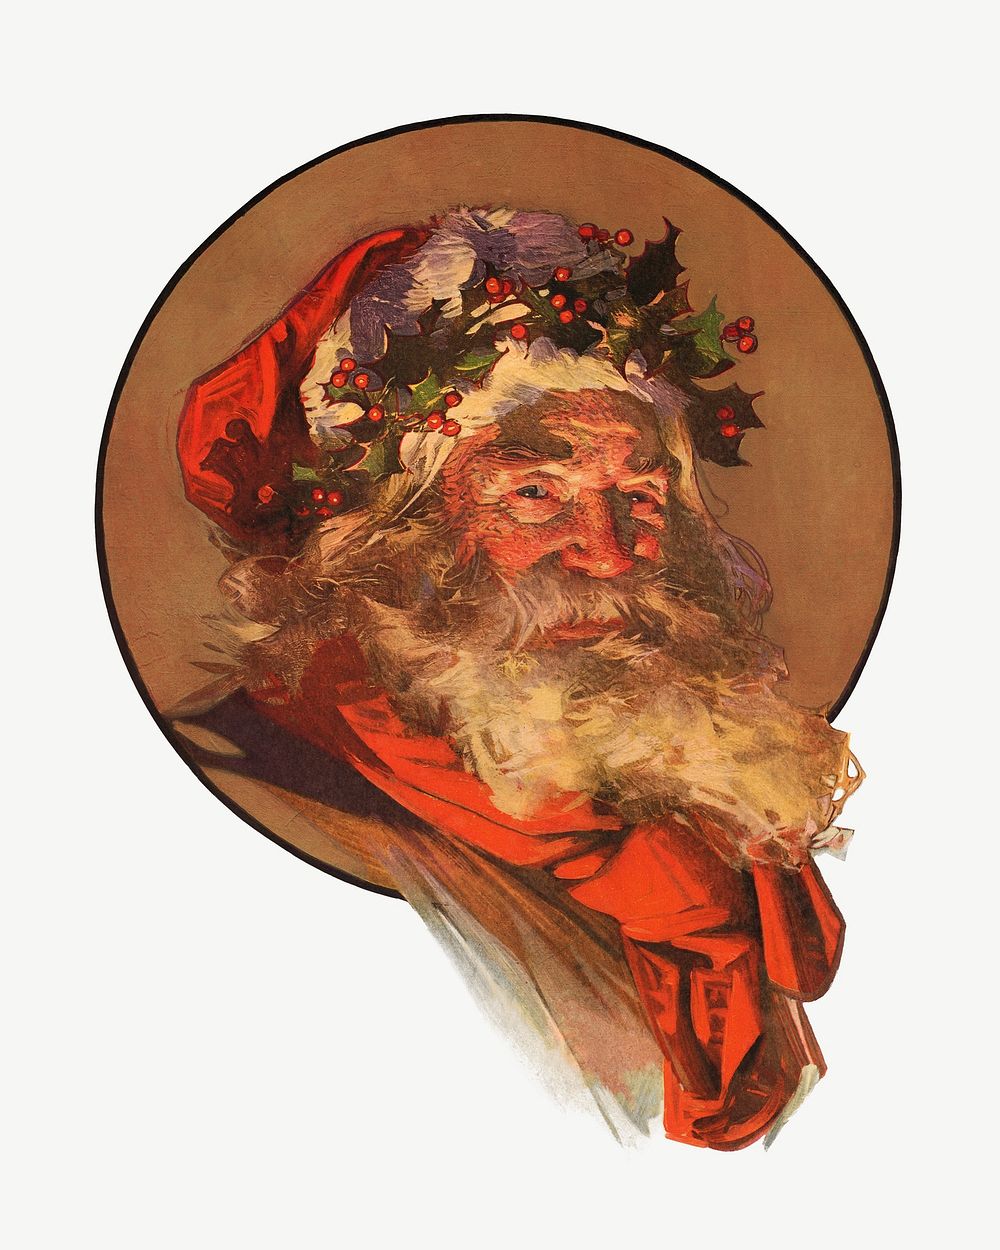 Santa Claus, vintage portrait collage element psd.   Remastered by rawpixel